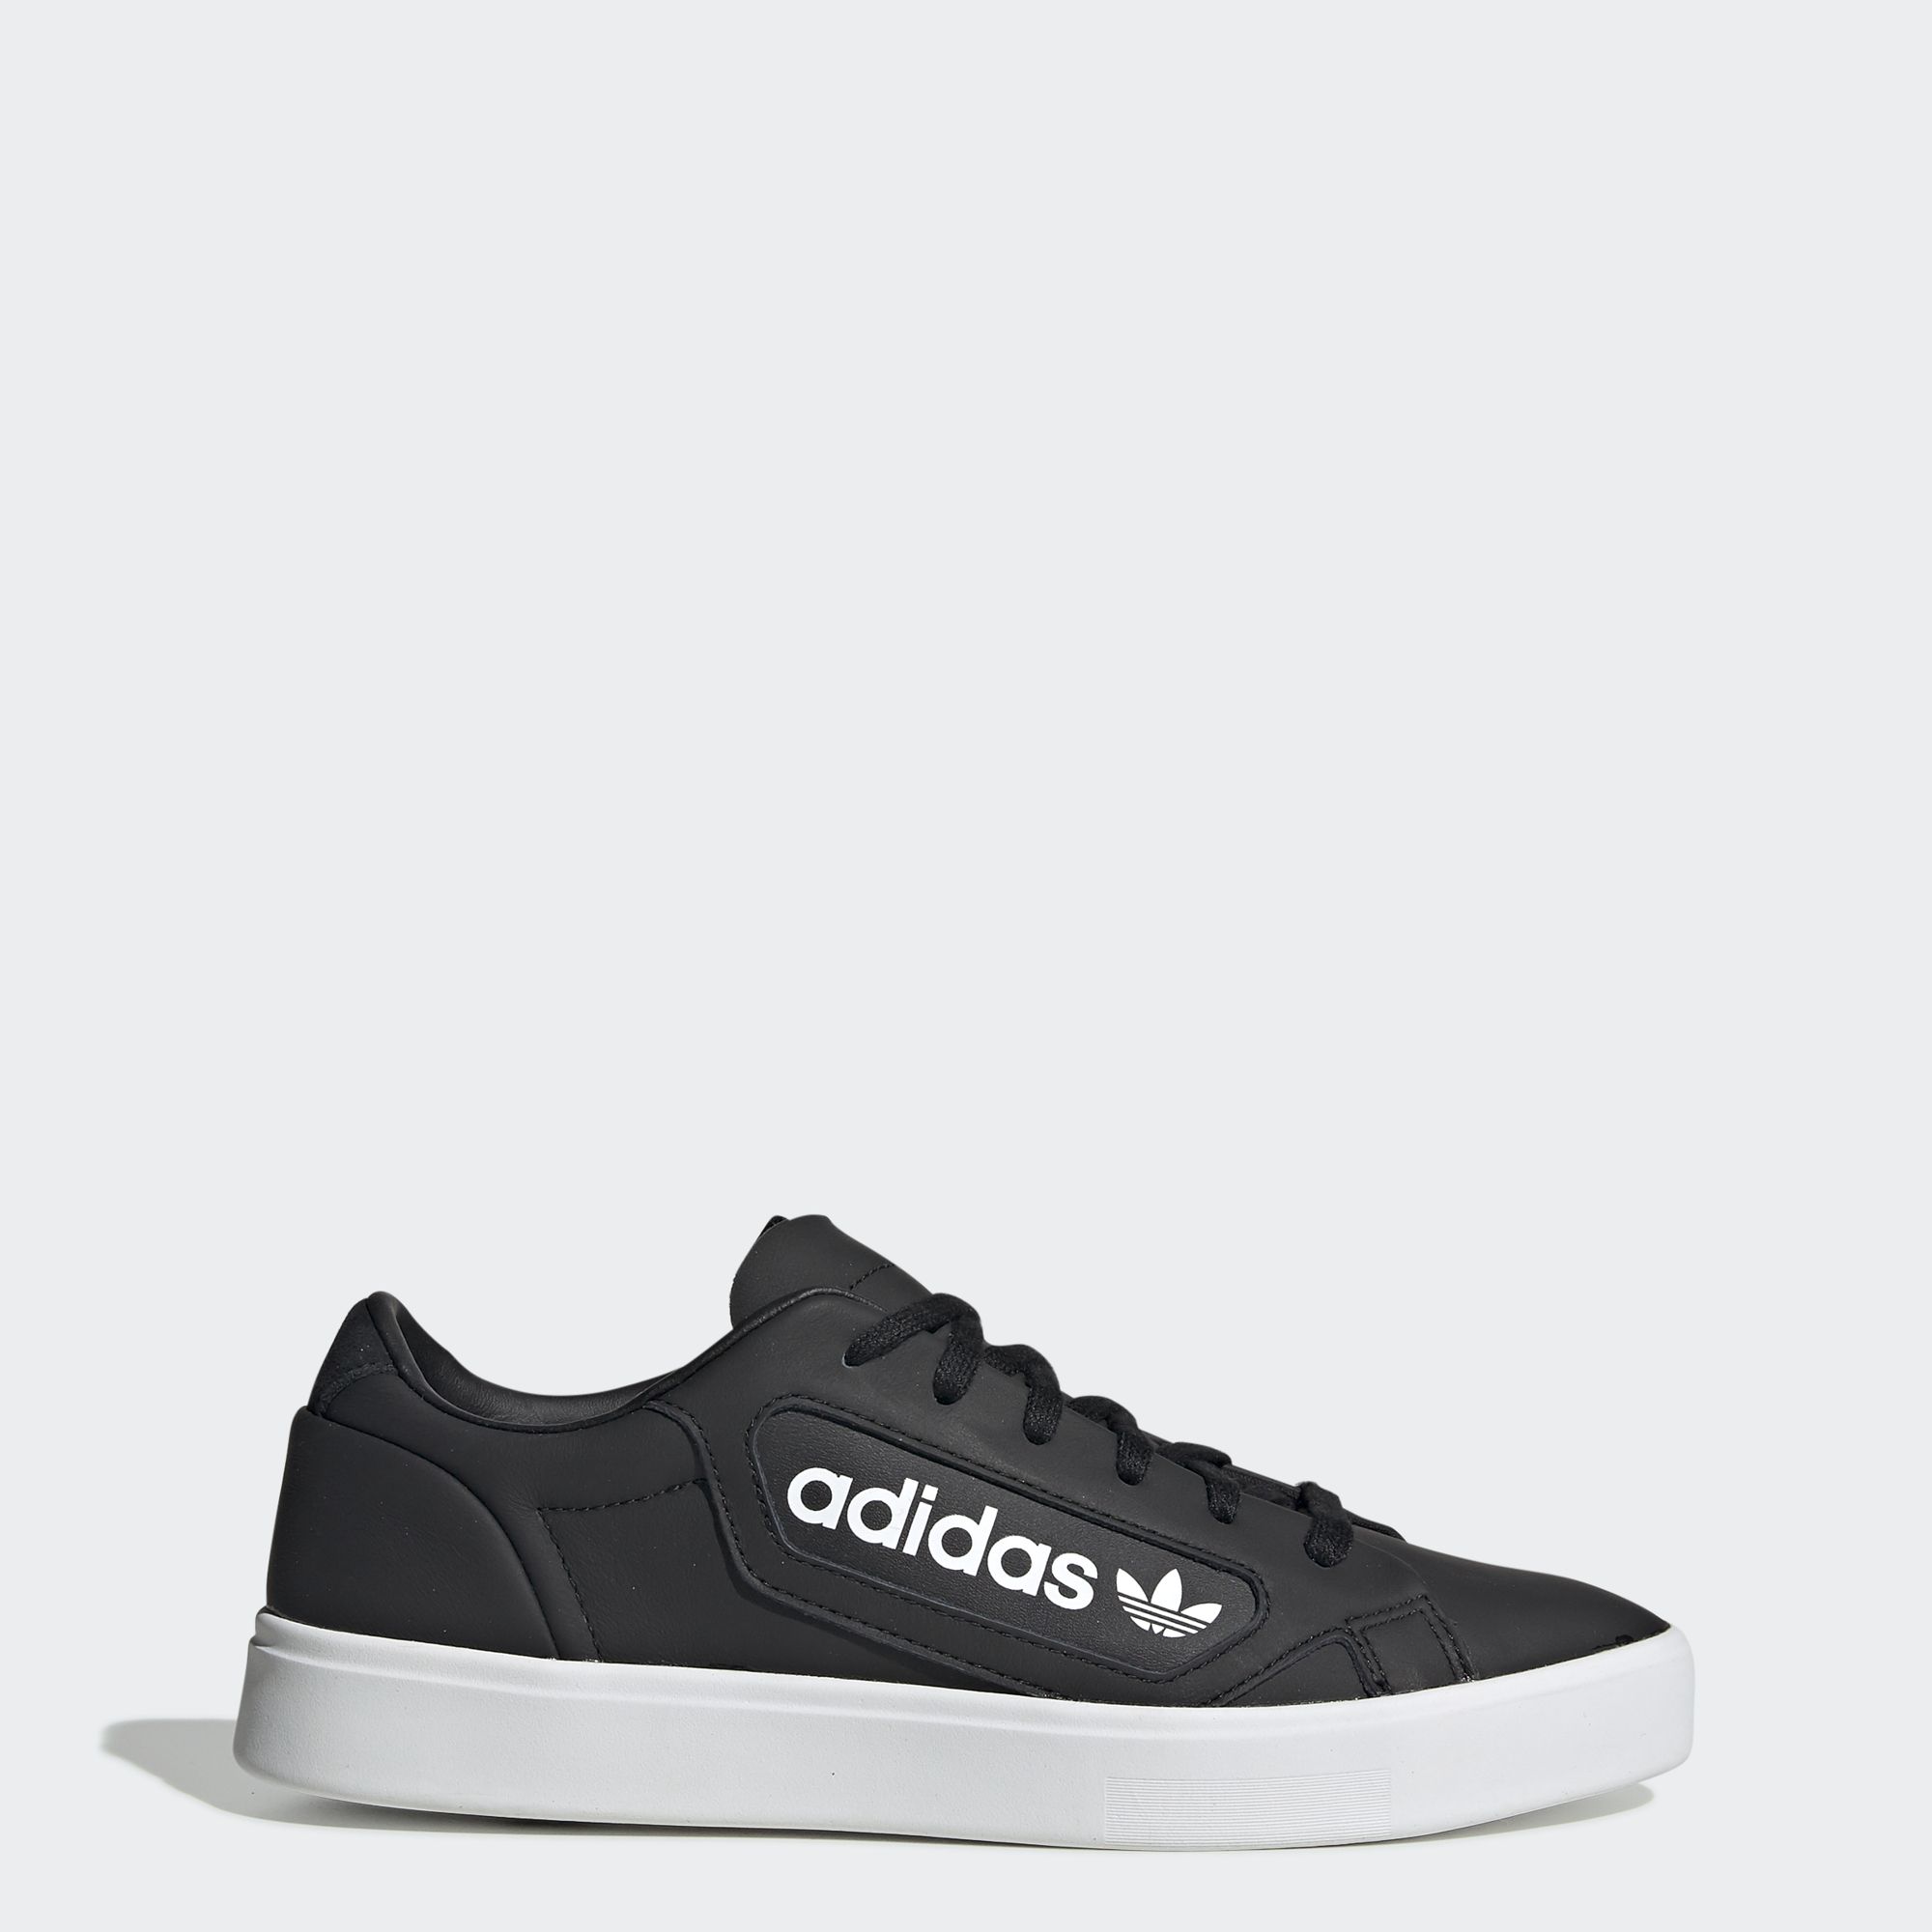 Buy Adidas Sneakers Online | lazada.sg